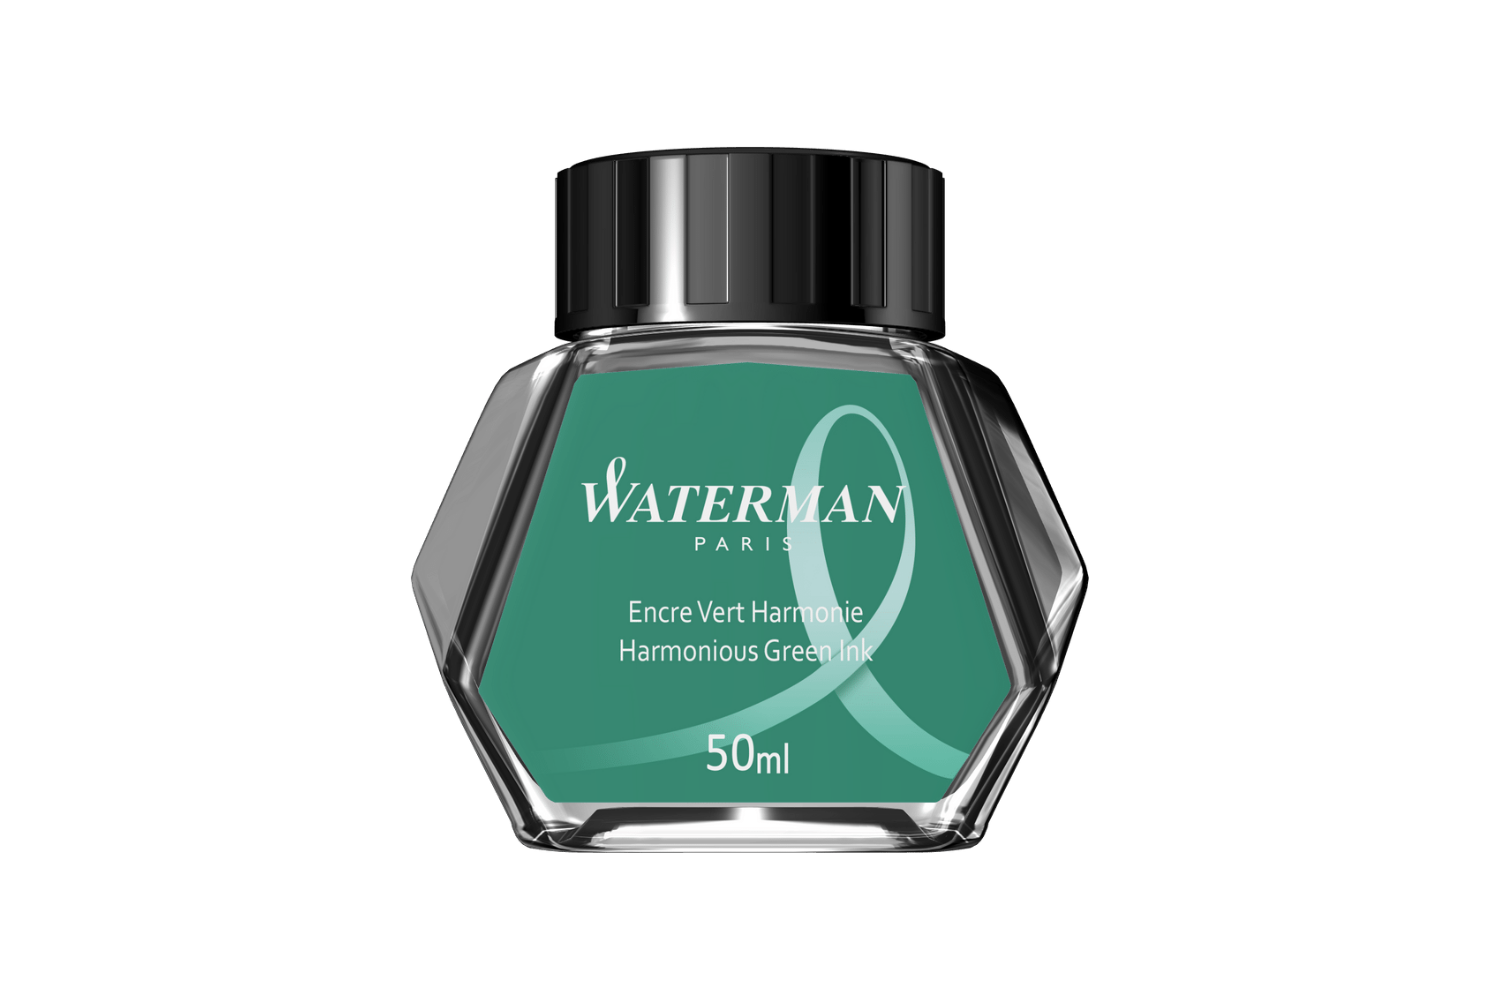 Waterman - Harmonious Green Ink 50ml